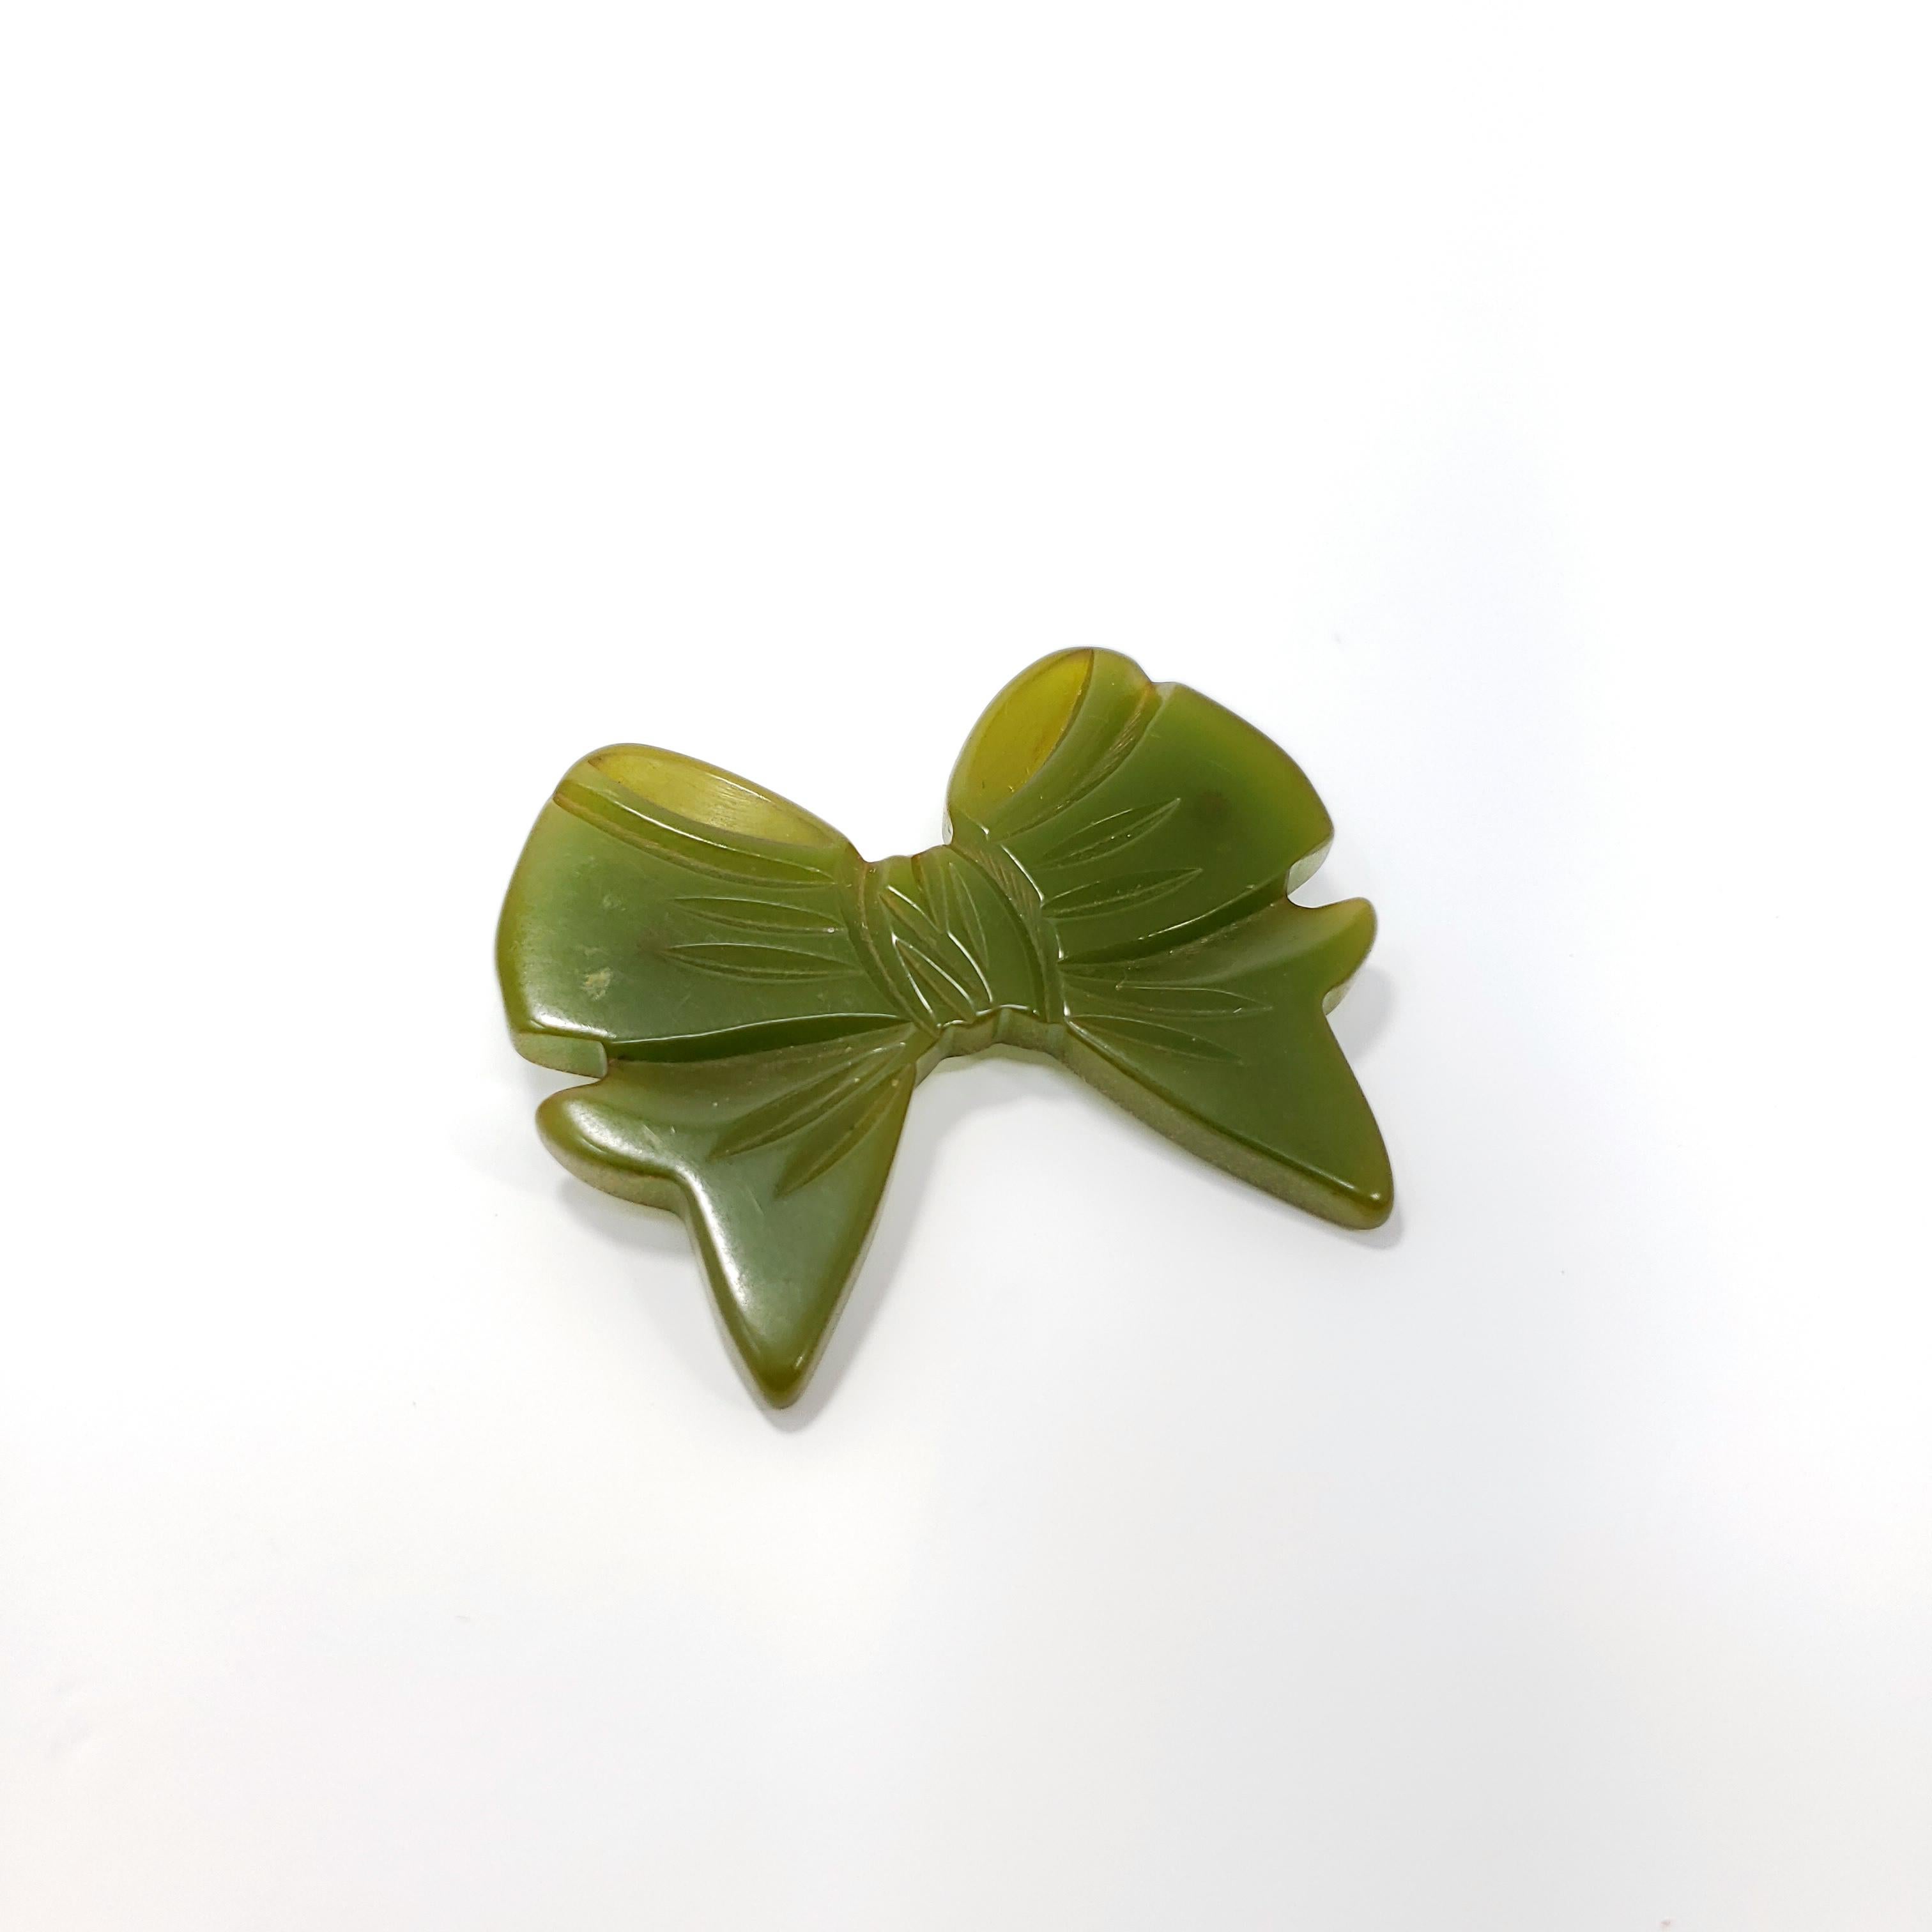 Fabulous bakelite bow pin in vintage apple green. Wonderful condition.

